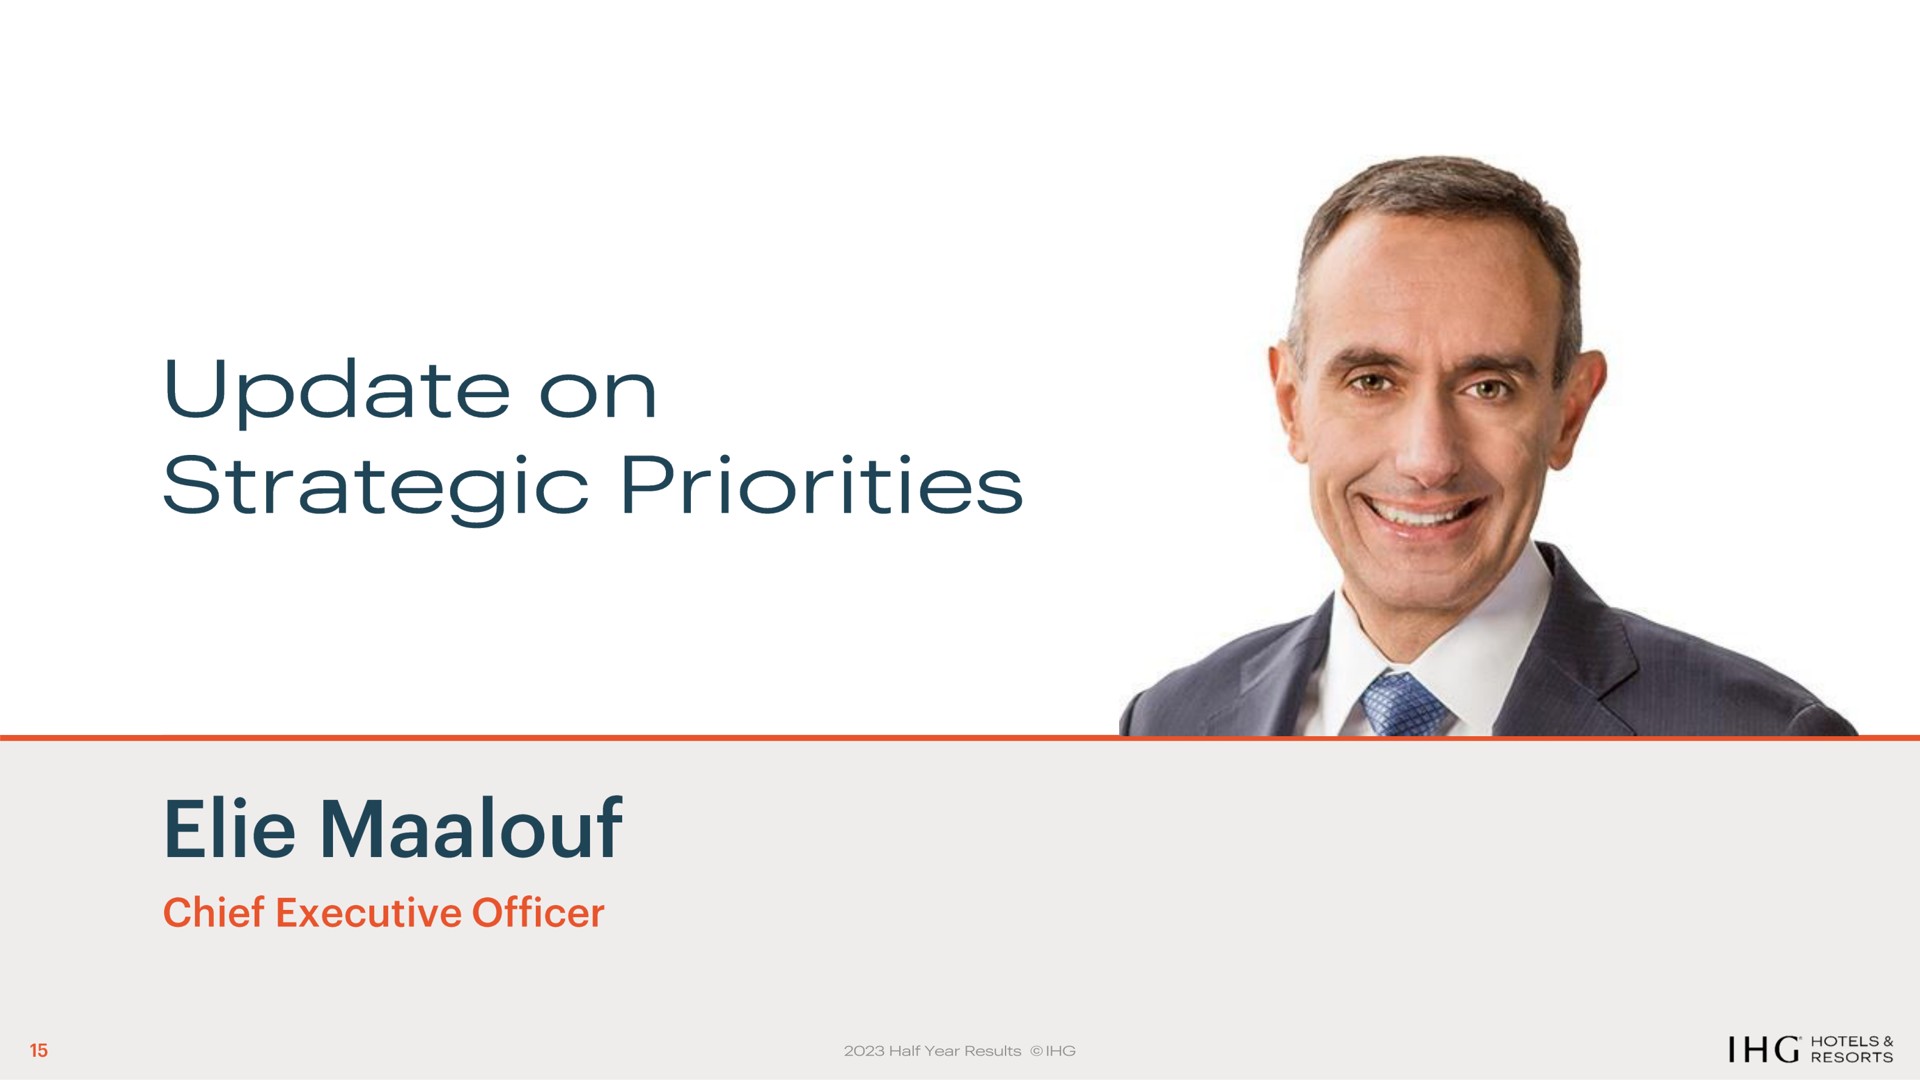 update on strategic priorities | IHG Hotels